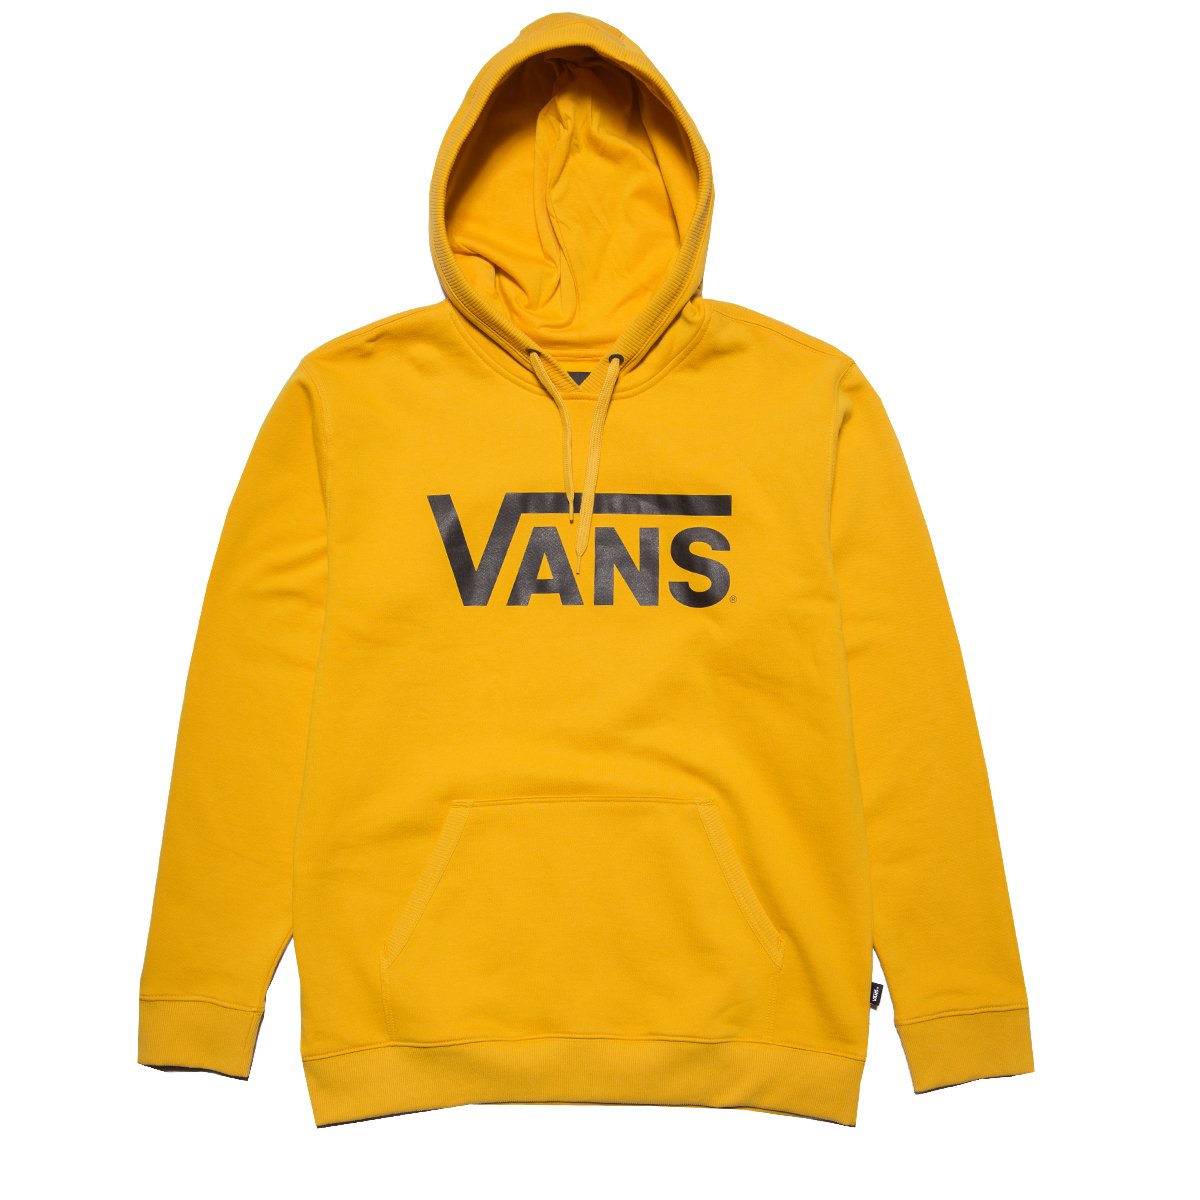 vans contrasting checkered gold & black hoodie